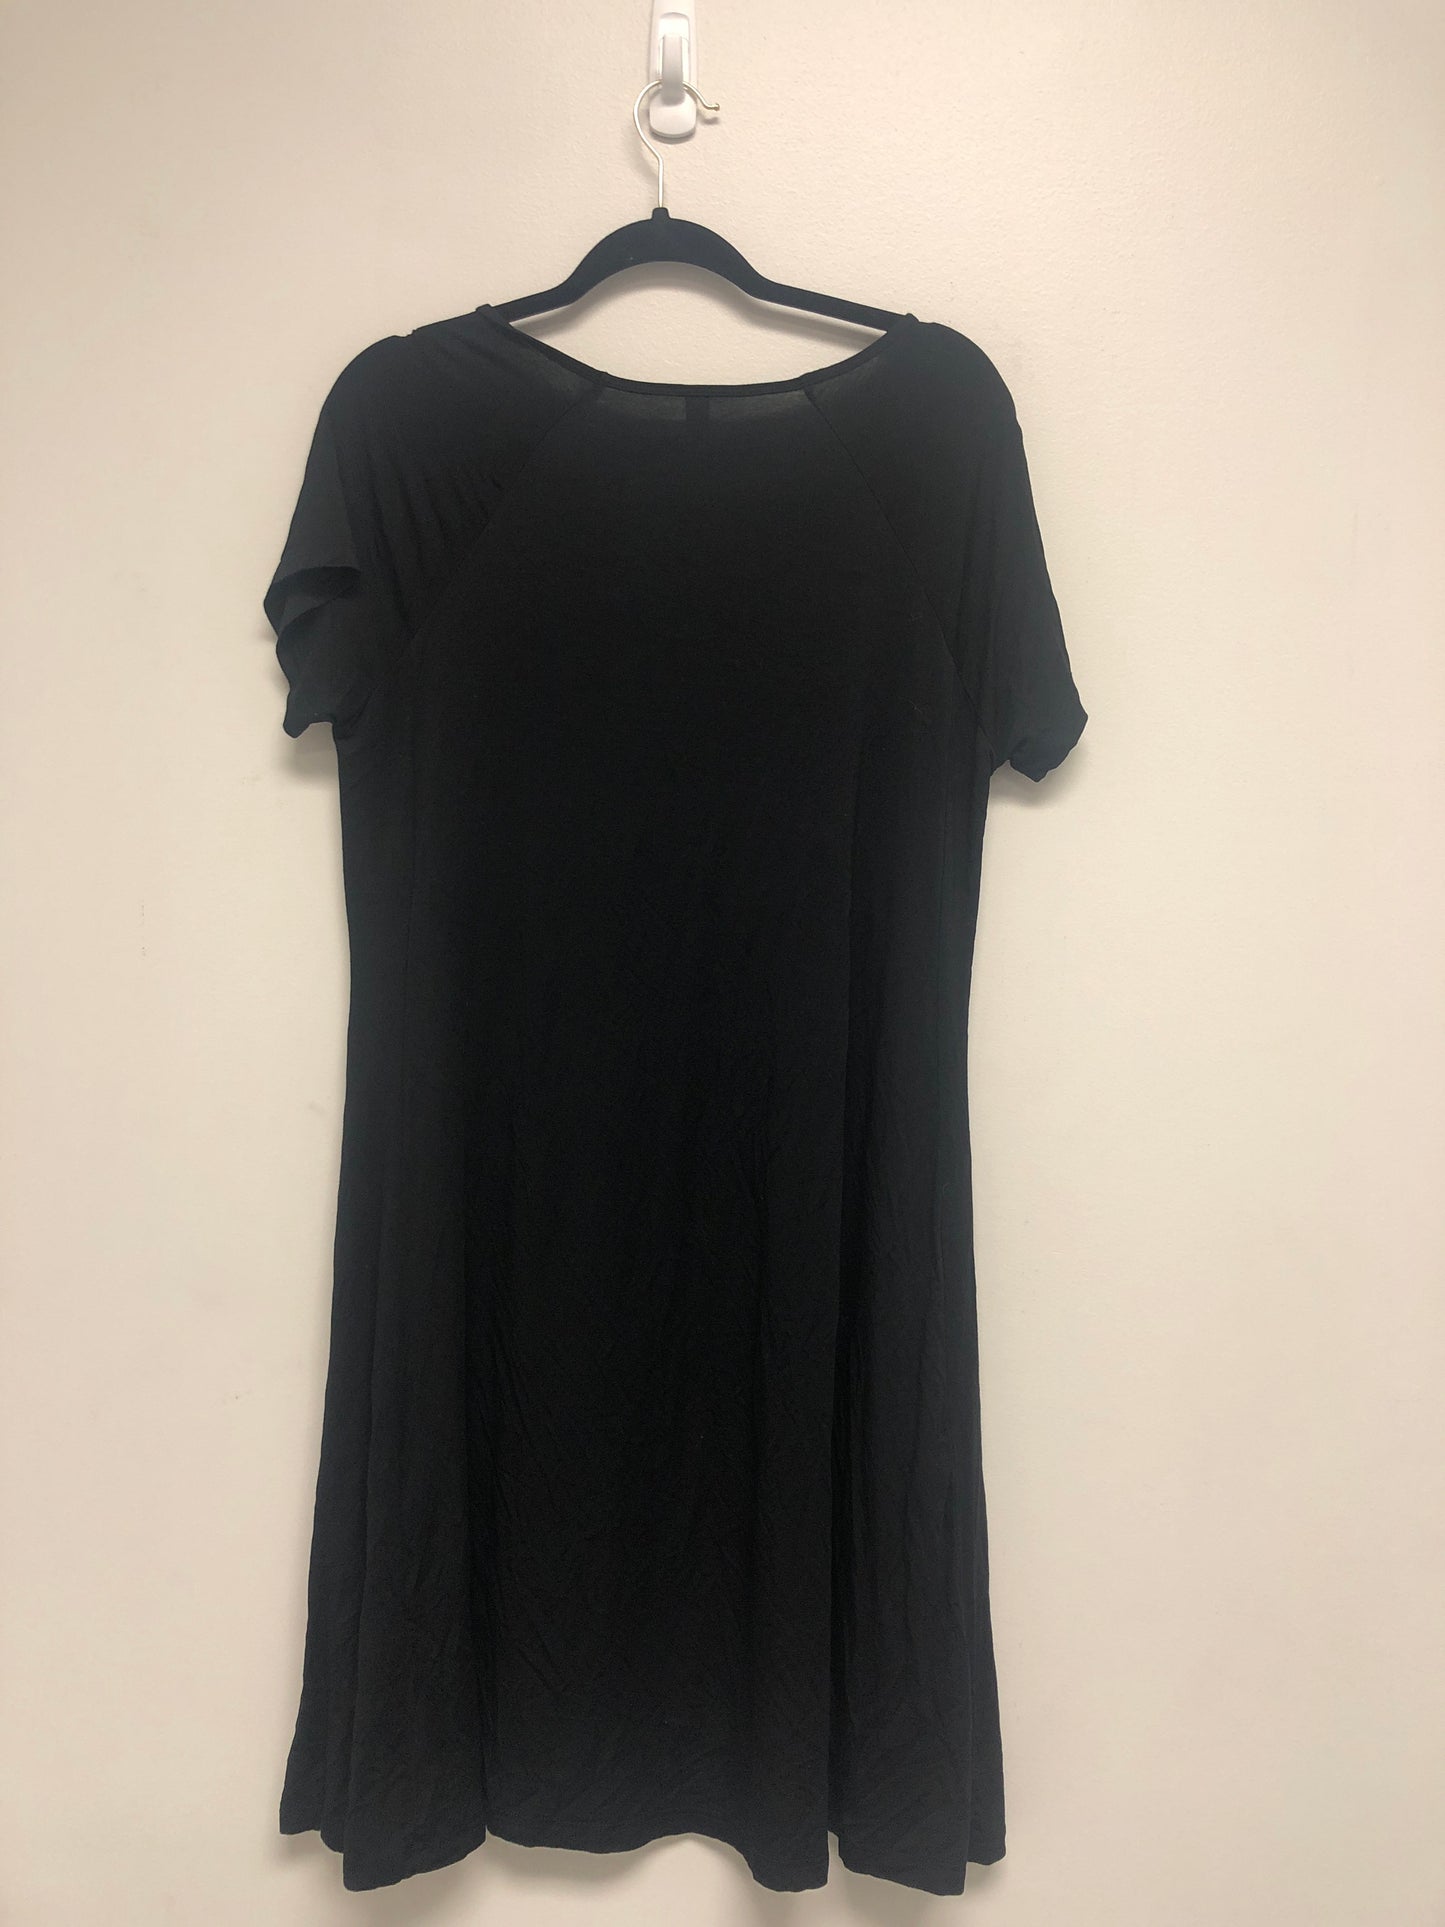 Outlet 6392 - Latched Mama Drawstring T-Shirt Nursing Dress - Black - Large